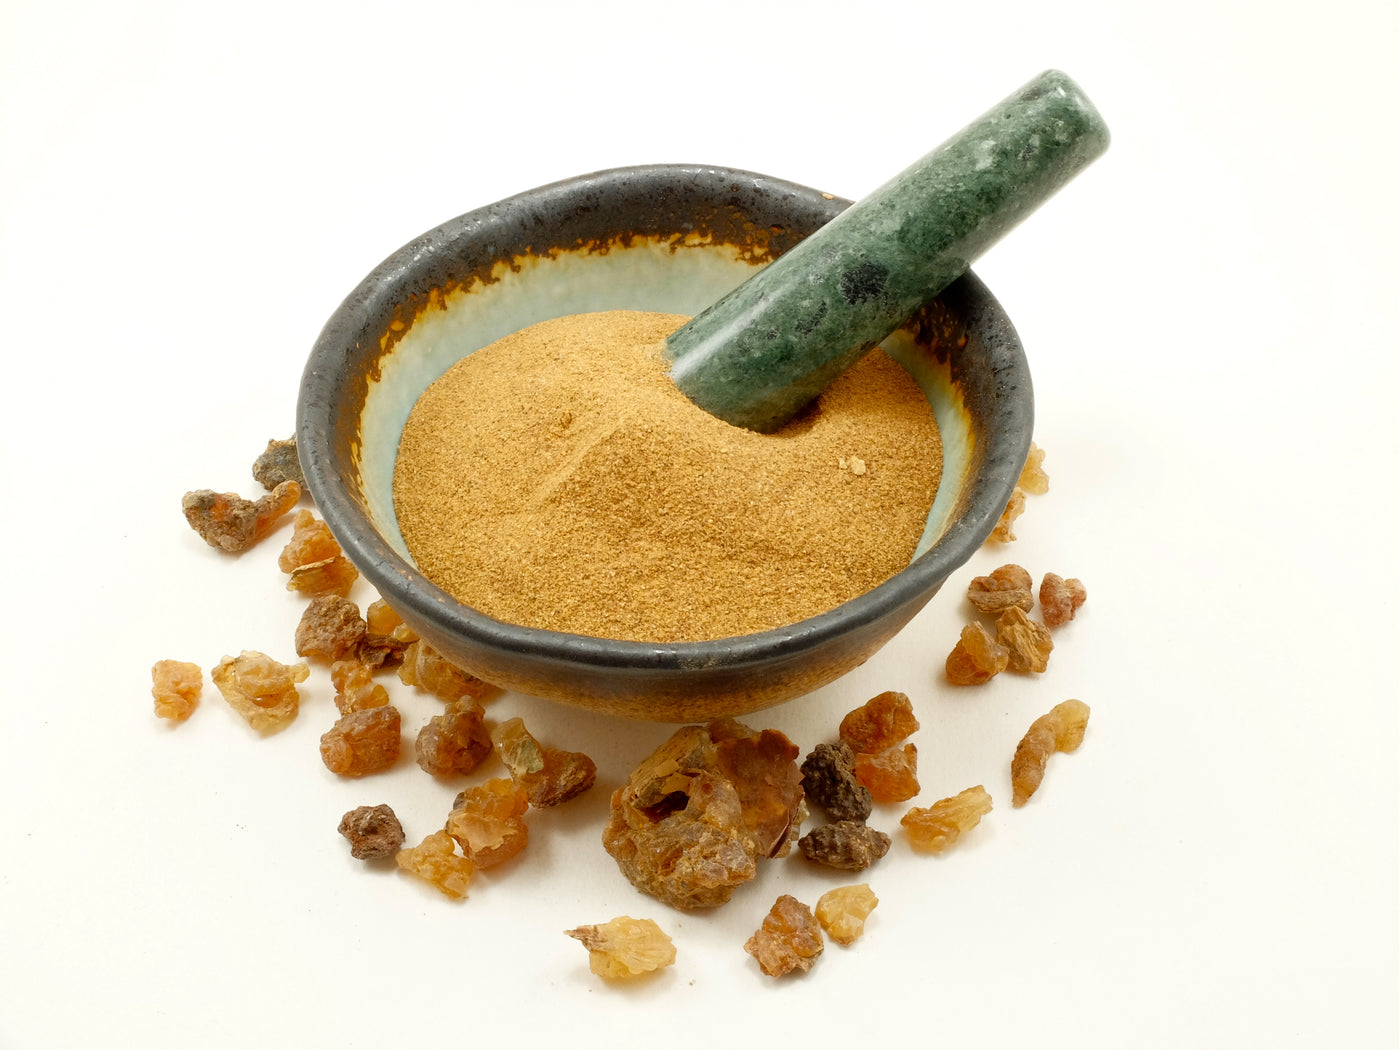 Myrrh Gum Powder Resin (1 2 3 4 6 8 10 12 oz ounce lb pound